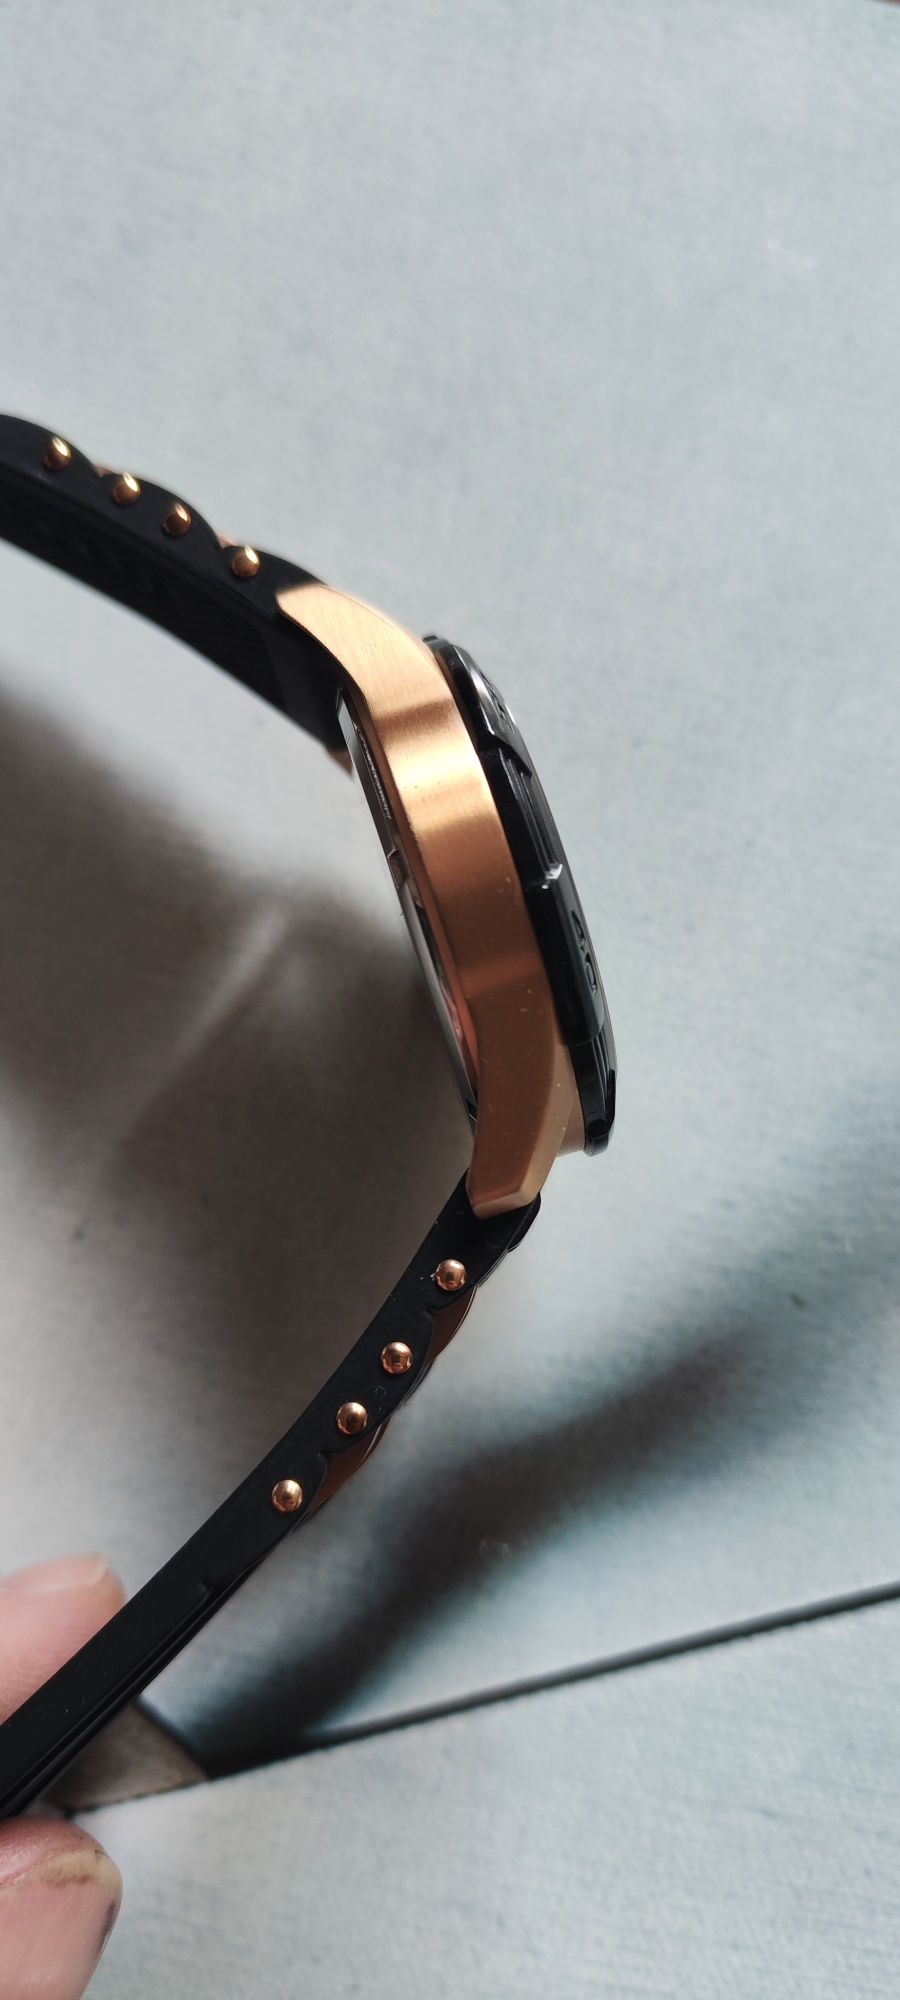 Zegarek GUESS czarny + różowe złoto 330feet Japan